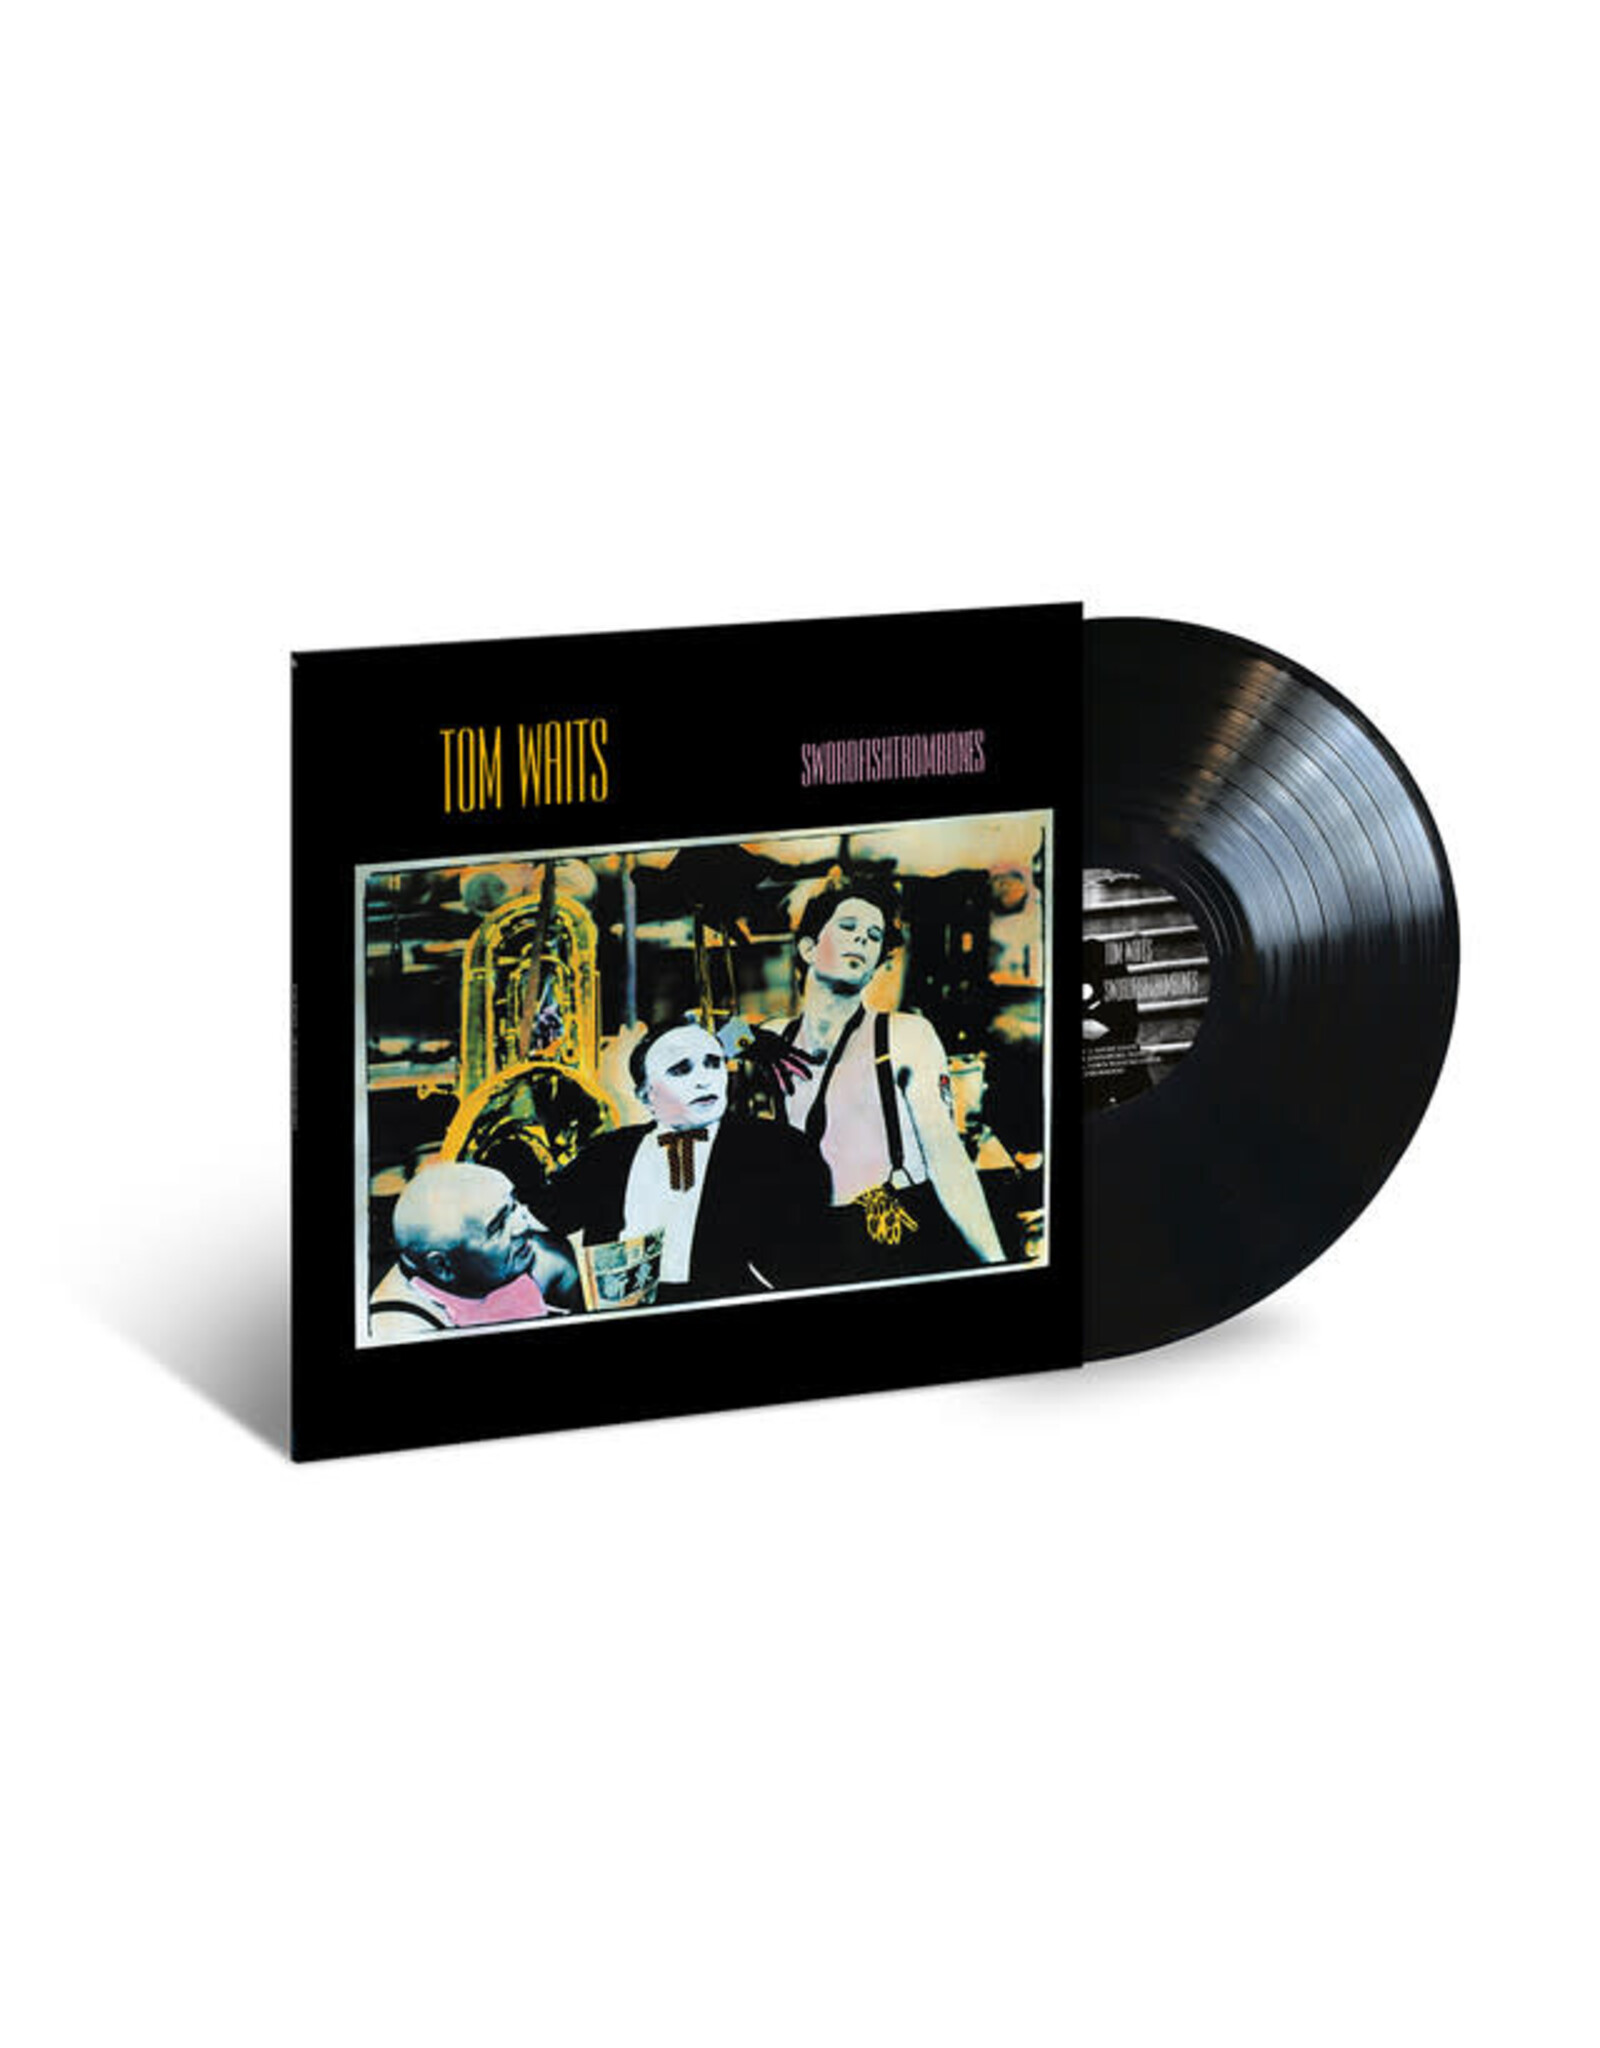 Island Waits, Tom: Swordfishtrombones (180g/remaster) LP